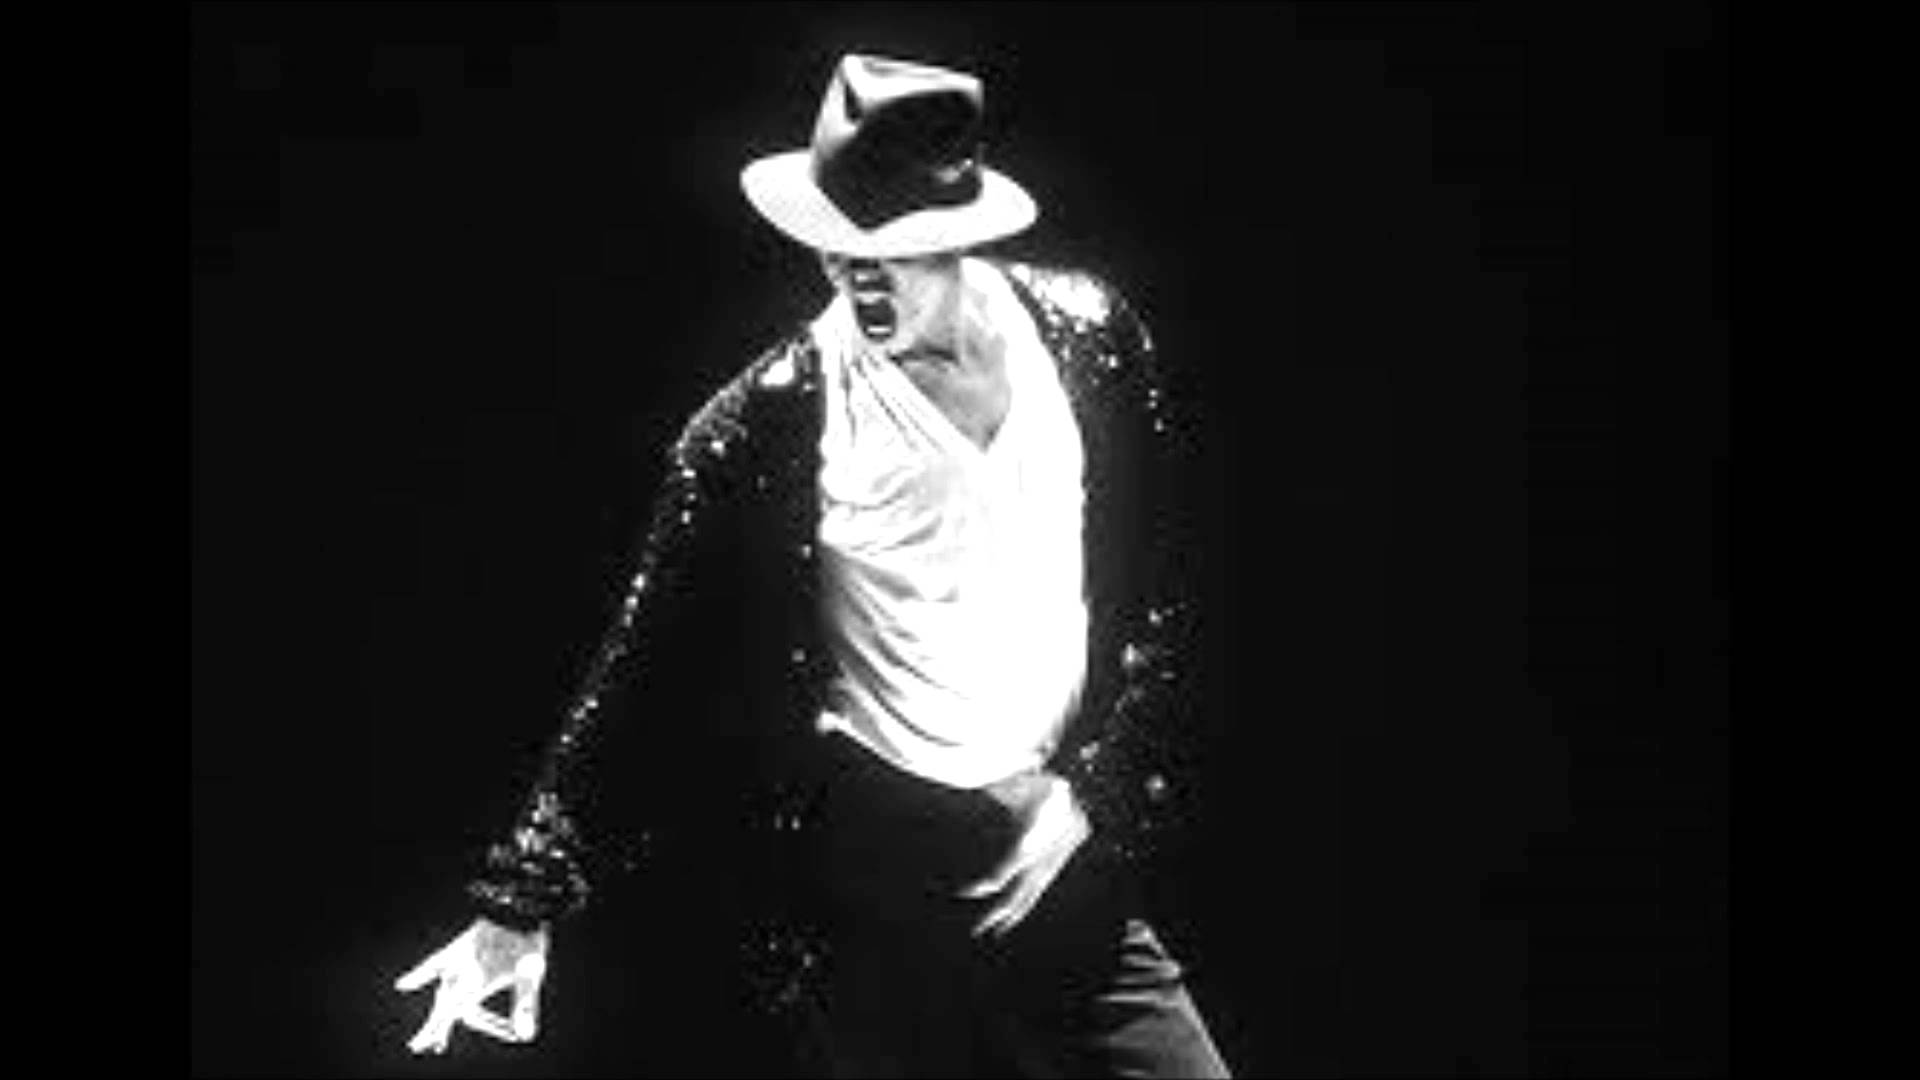 1920x1080px 51.82 KB Michael Jackson Billie Jean